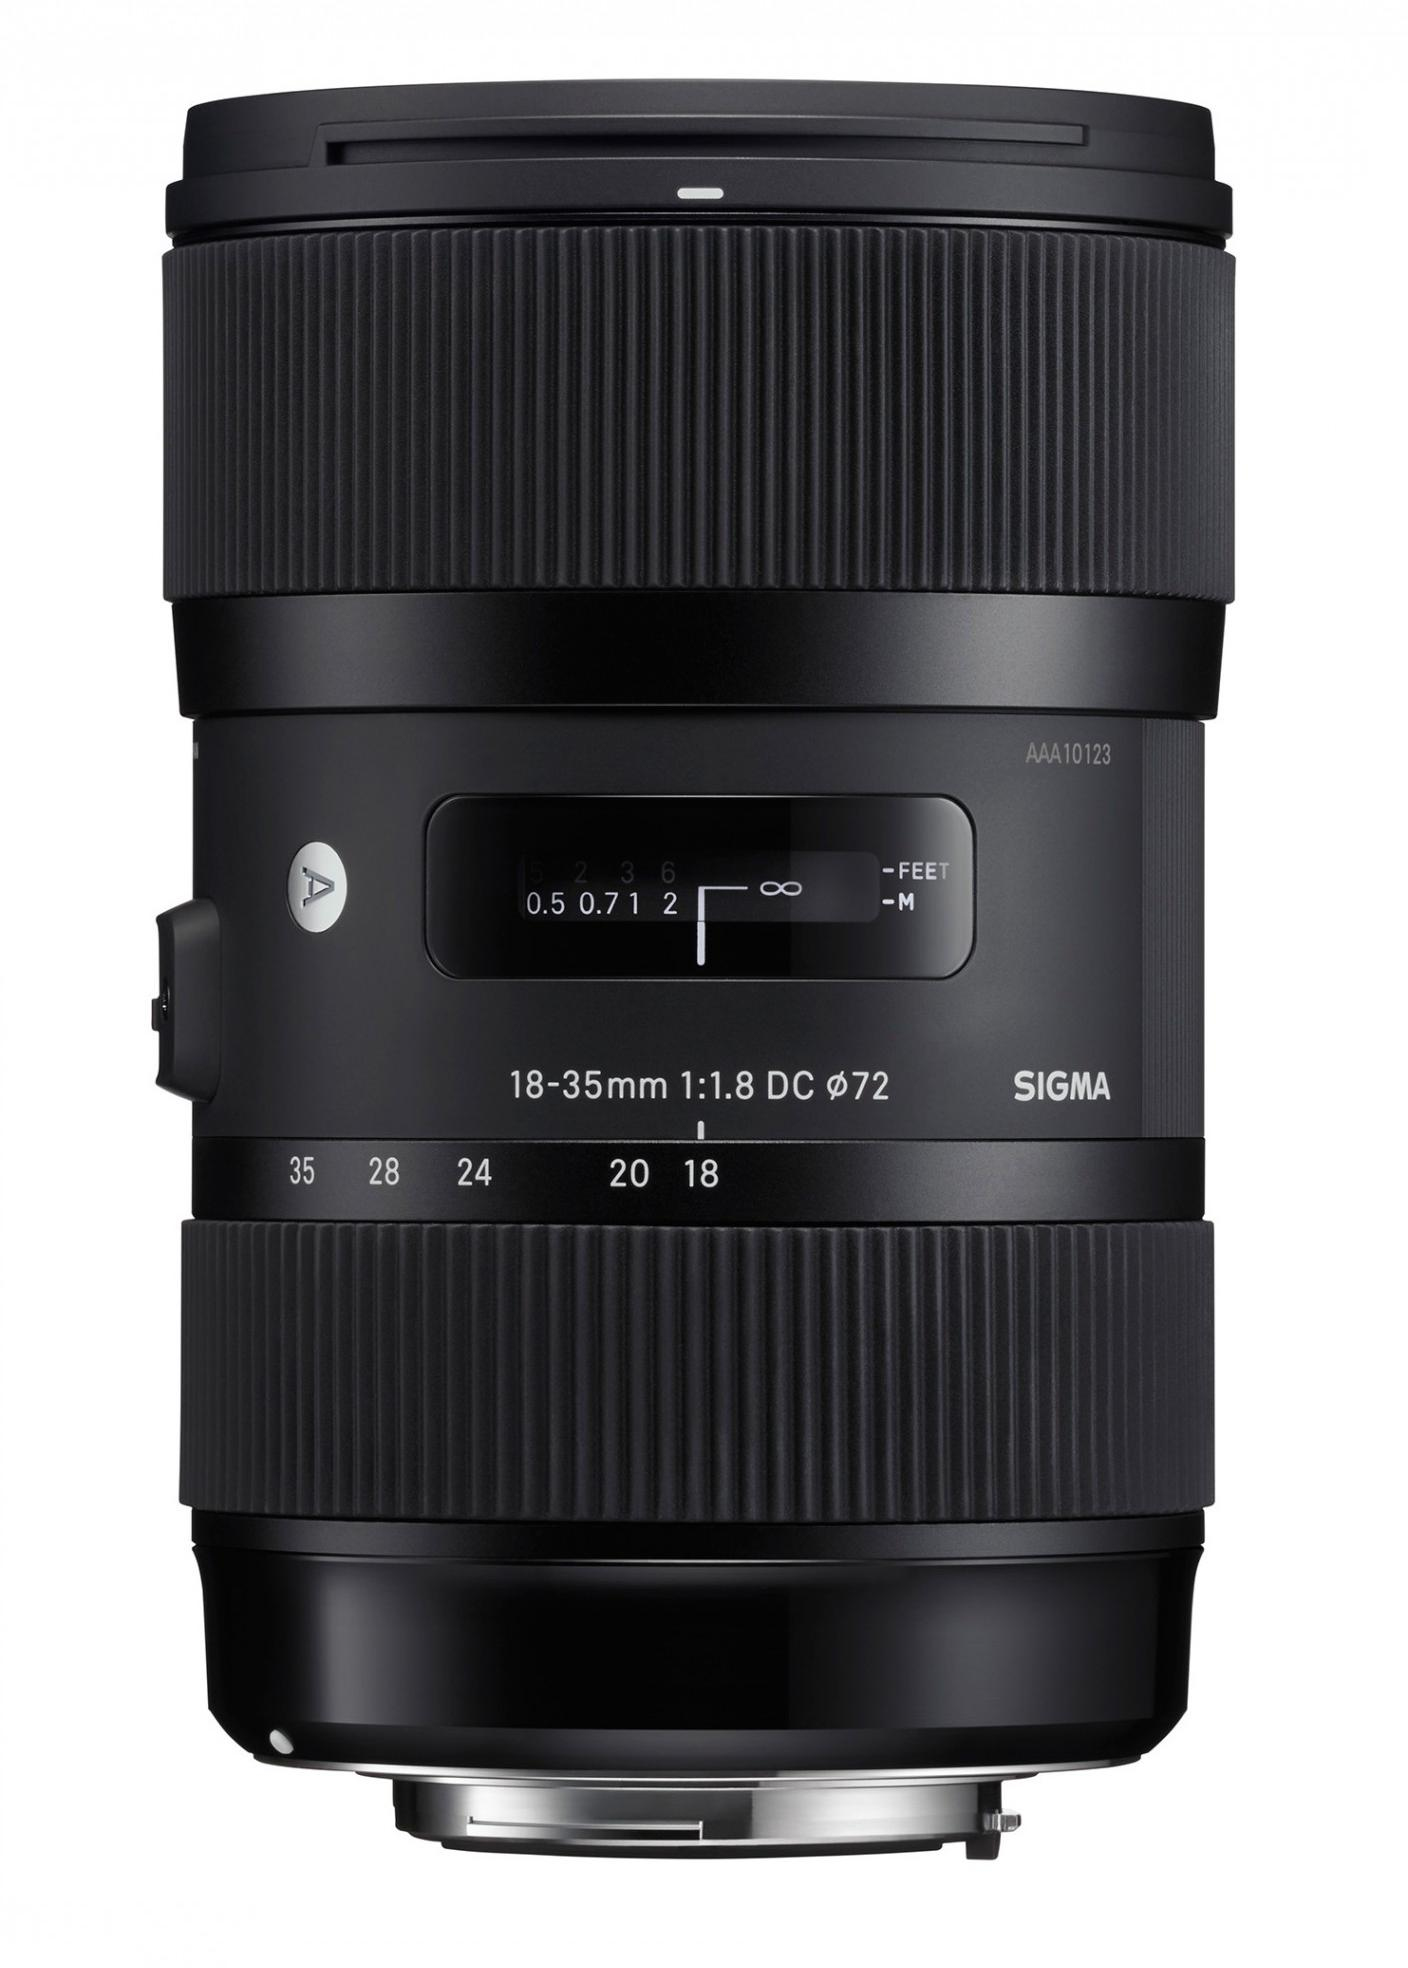 SIGMA 18-35mm F1.8 DC HSM | Art A013 | Canon EF-Sマウント